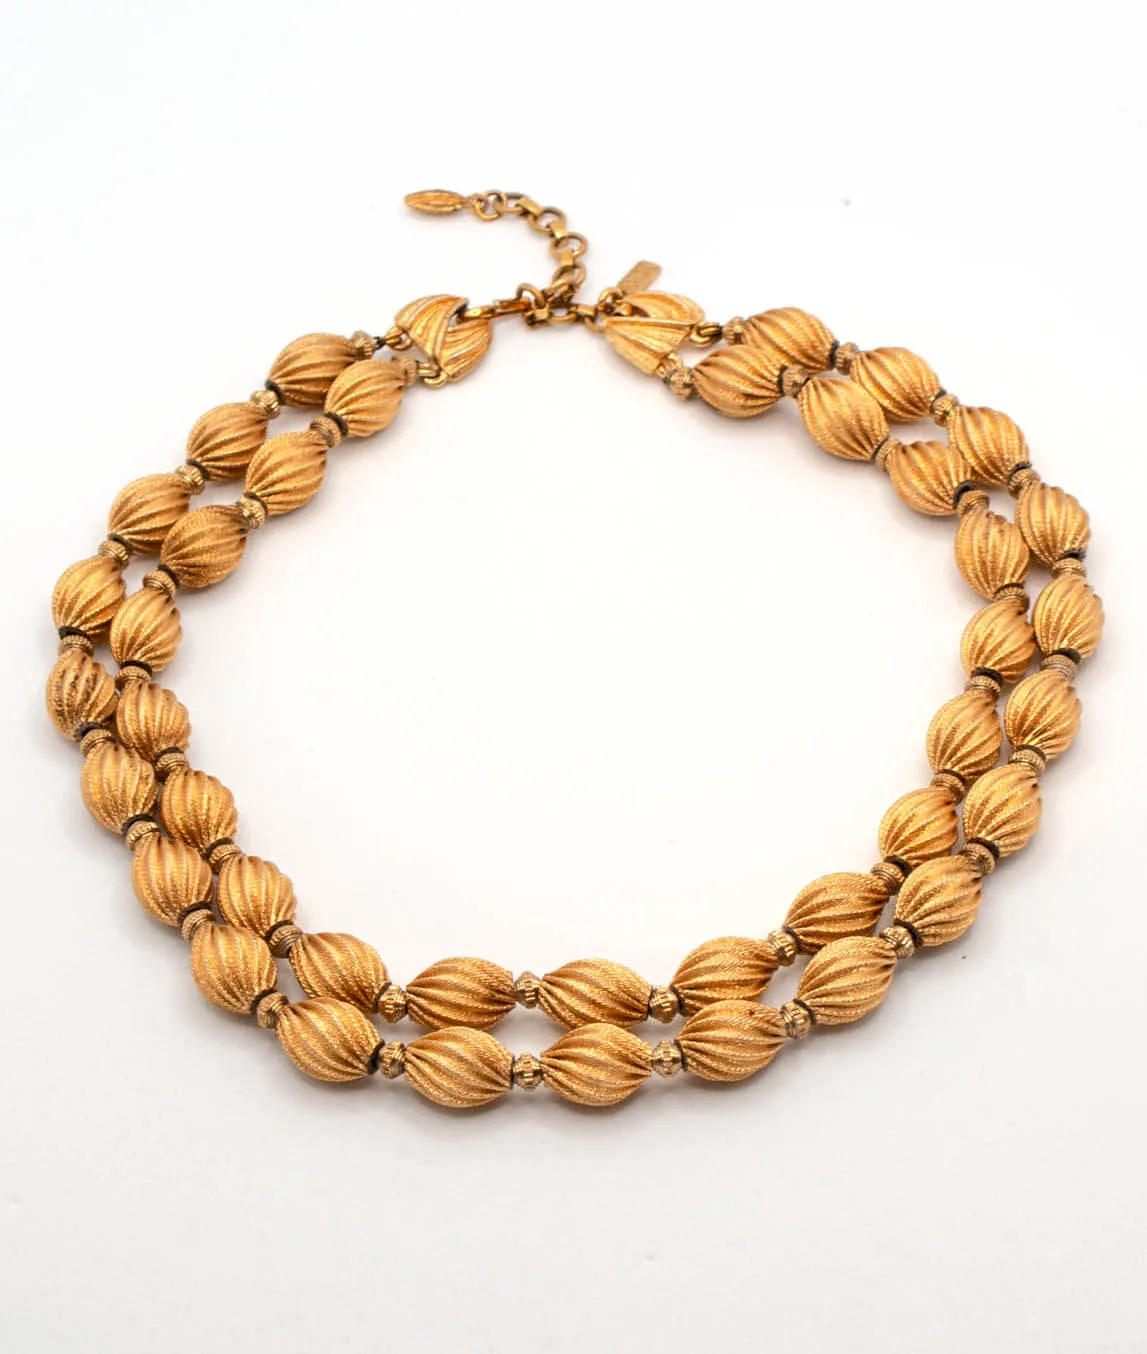 Vintage Monet necklace gold beads